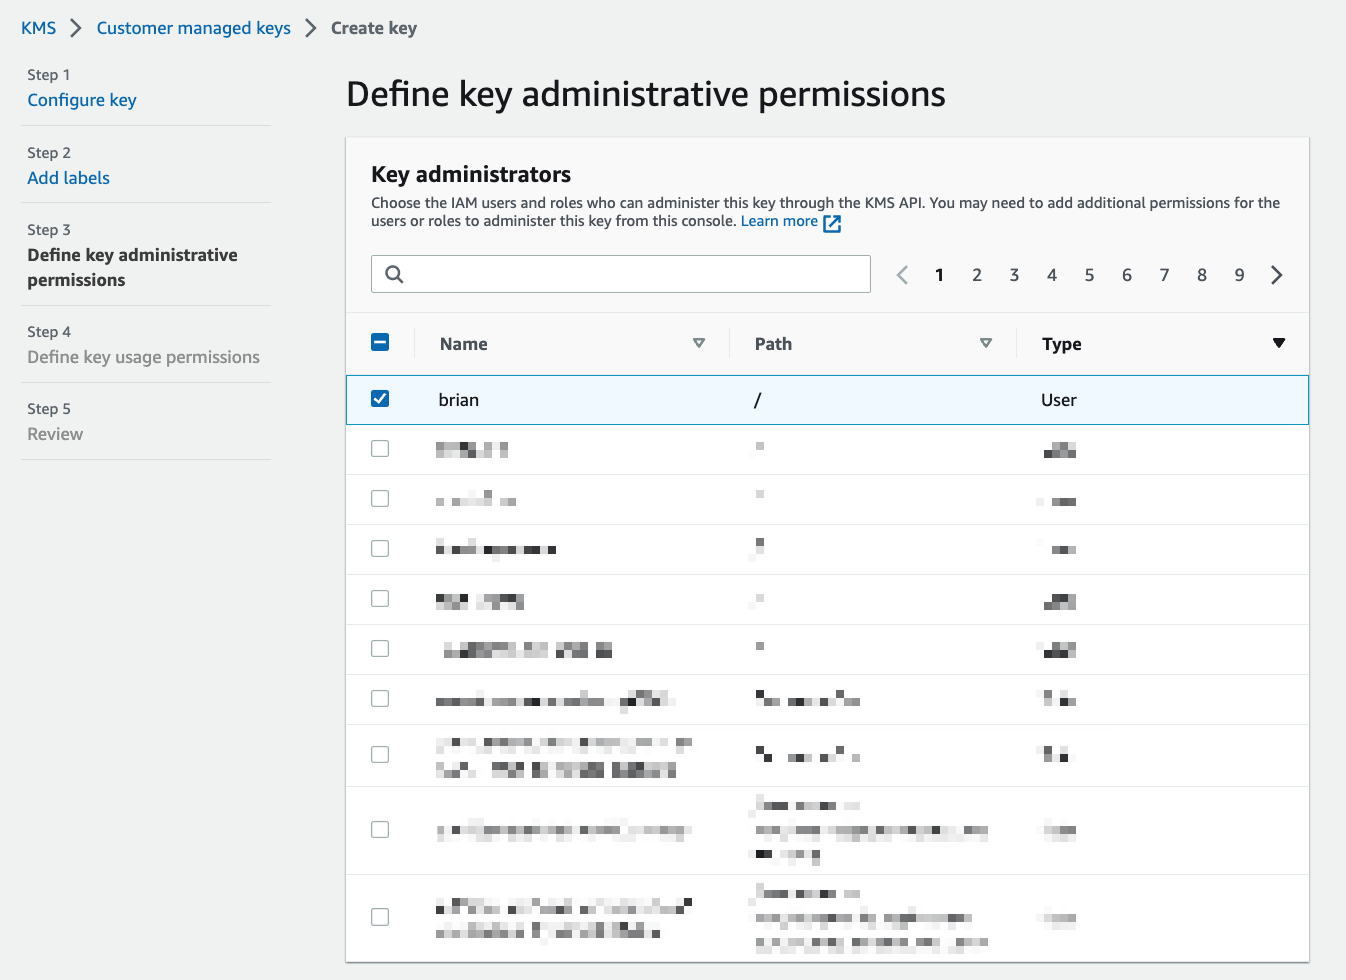 The Define key administrative permissions view.